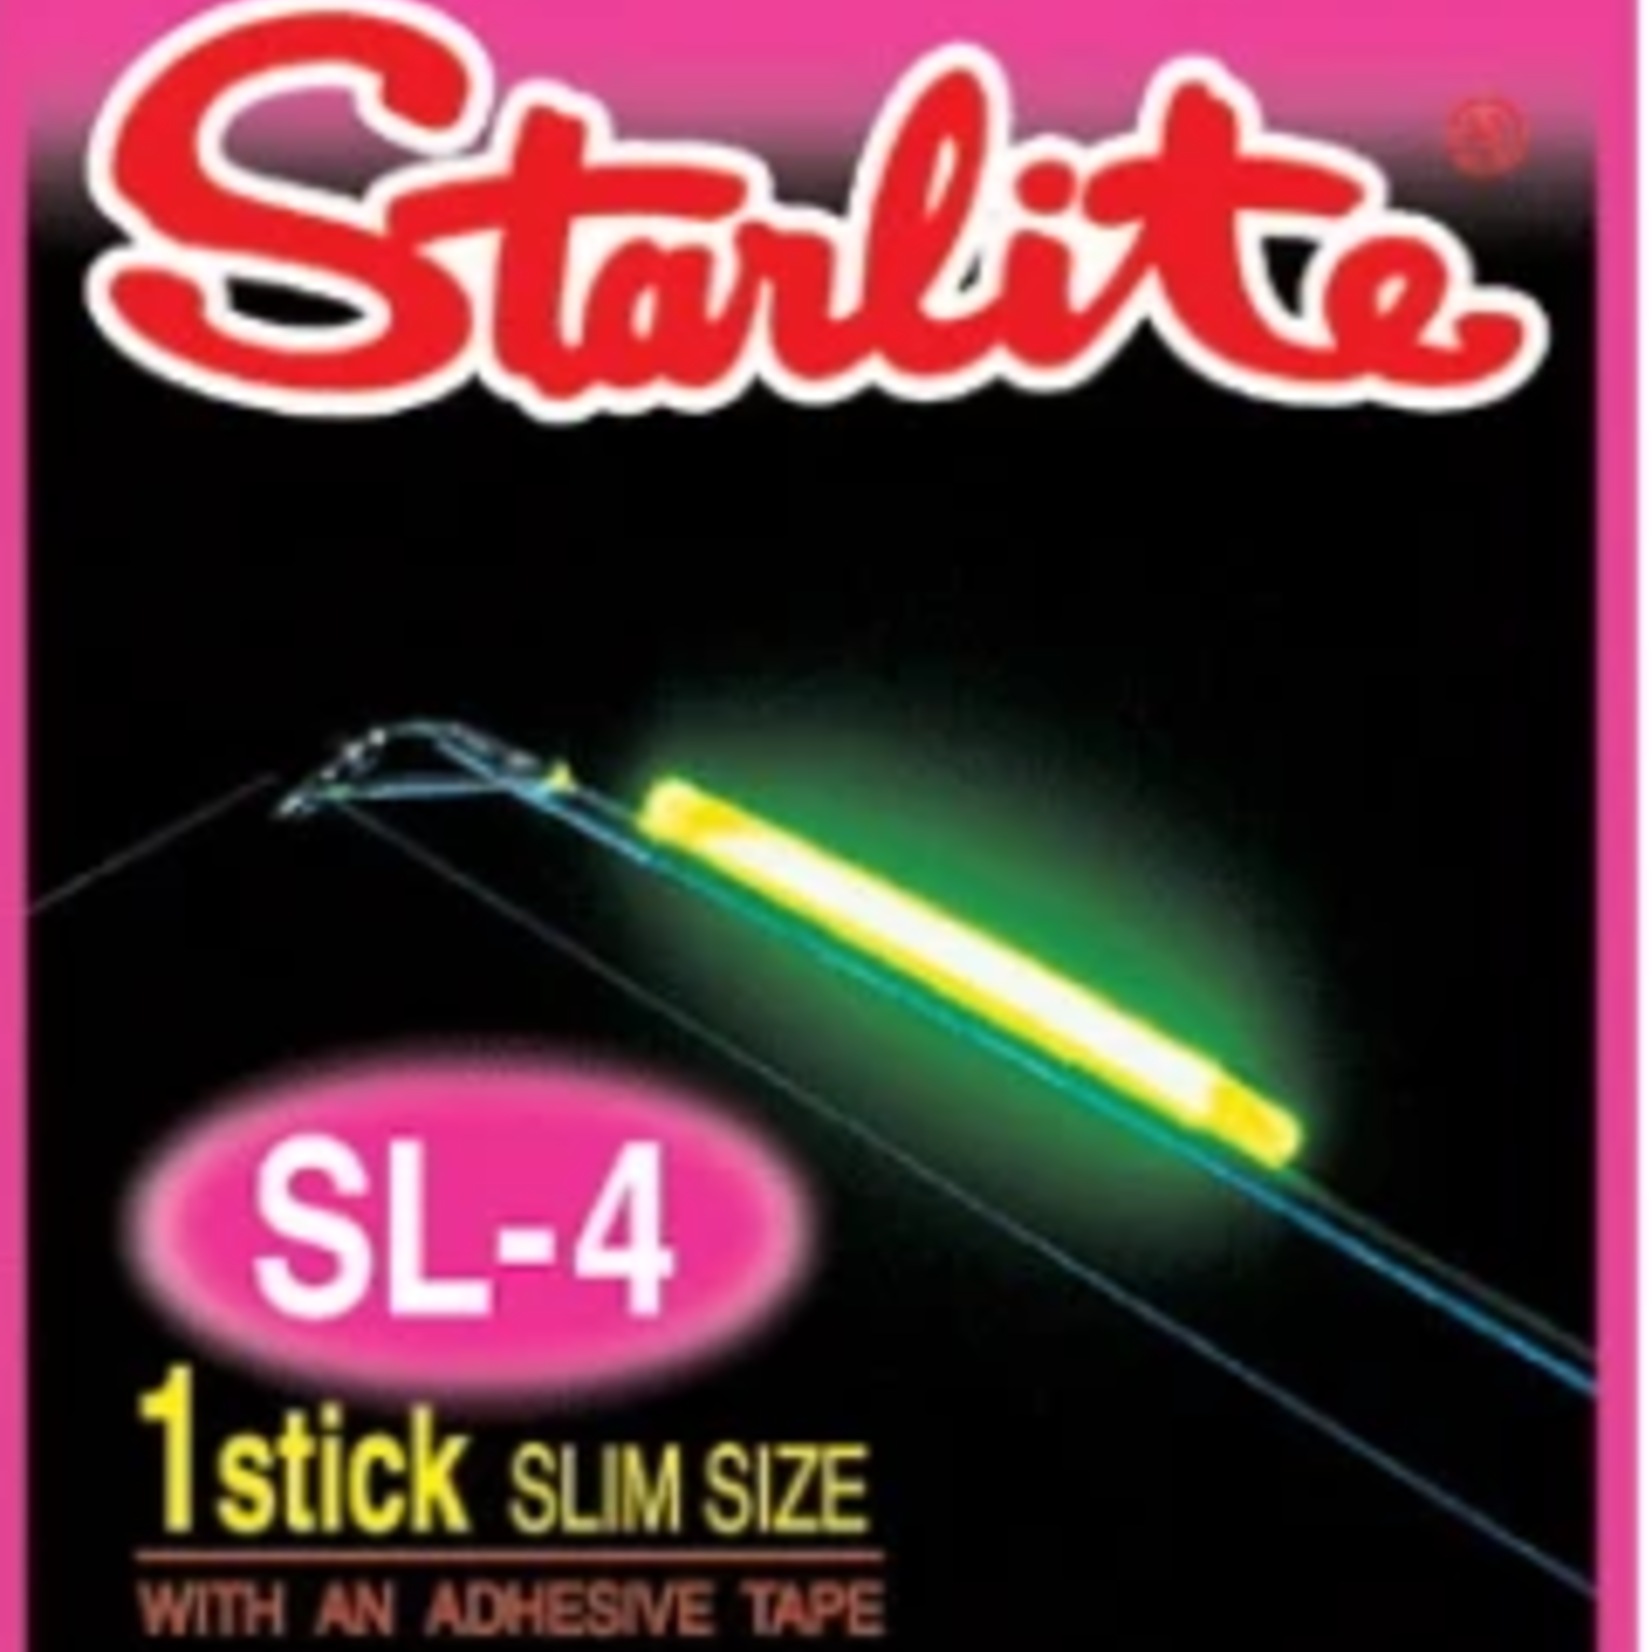 Starlite Glow Rod Tip Lights